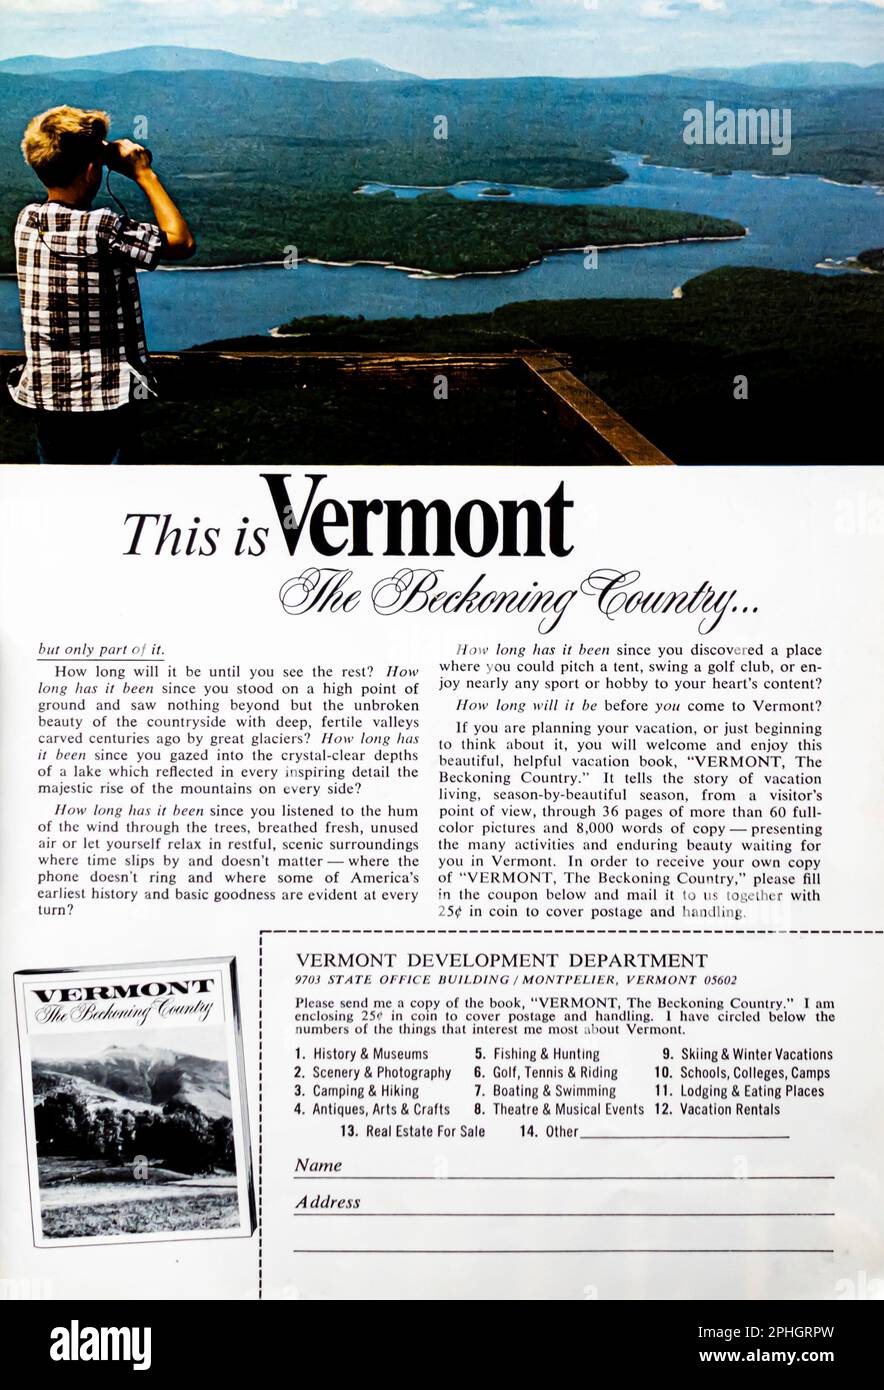 Vermont travel advert in a Natgeo magazine, March 1966 Stock Photo